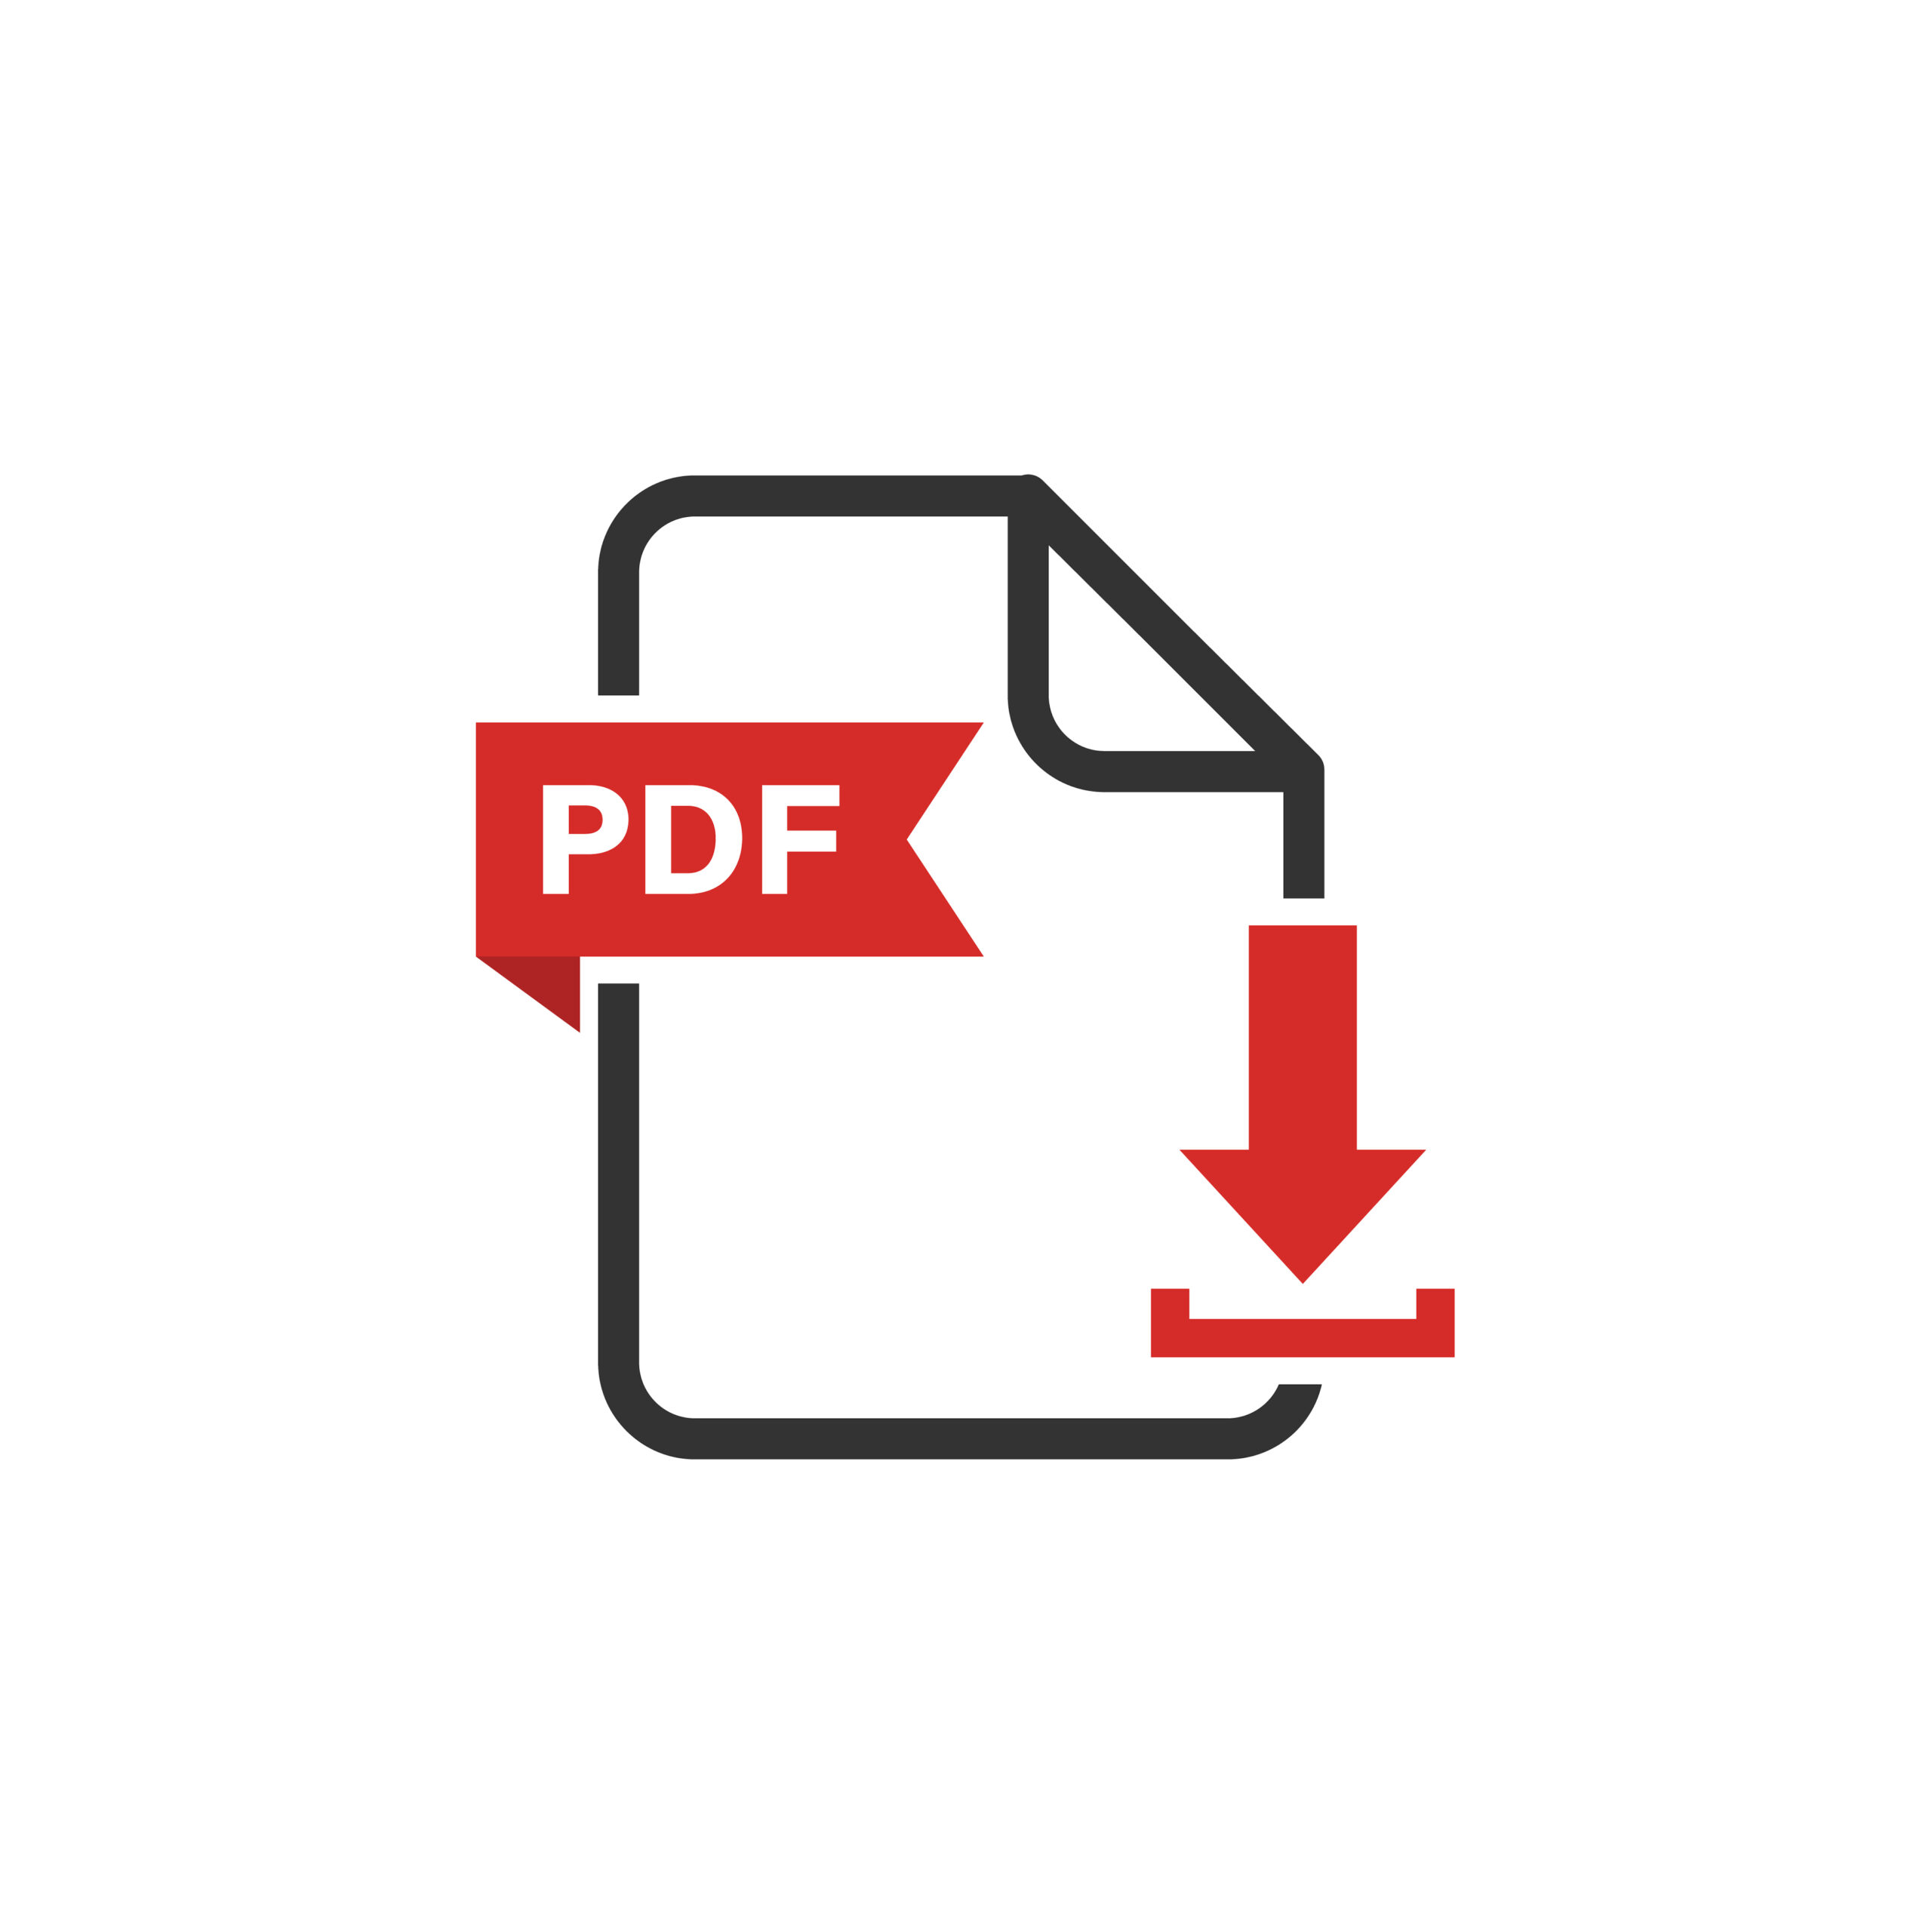 PDF file icon. Download document content creation